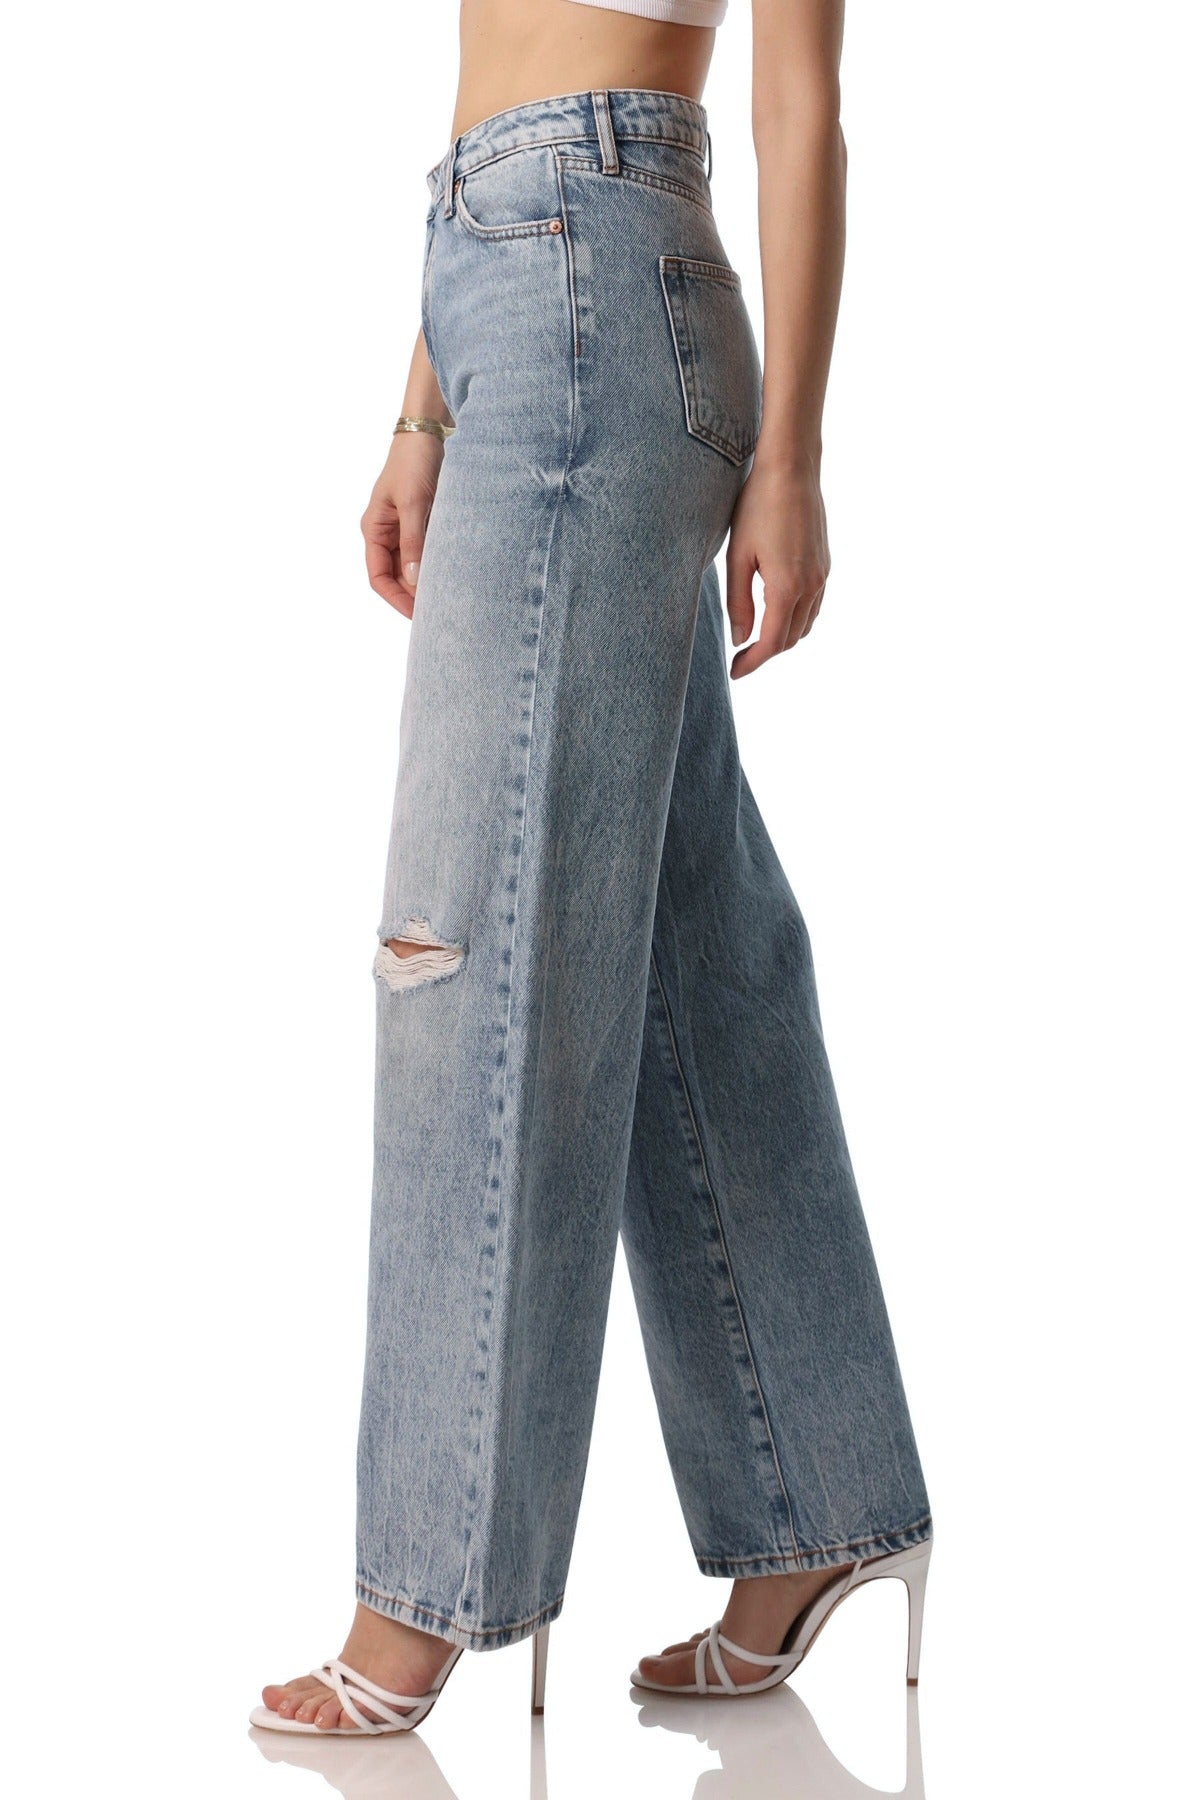 convertible waist wide leg distressed jeans flattering 2 in 1 denim adjustable high low rise maya light blue wash 